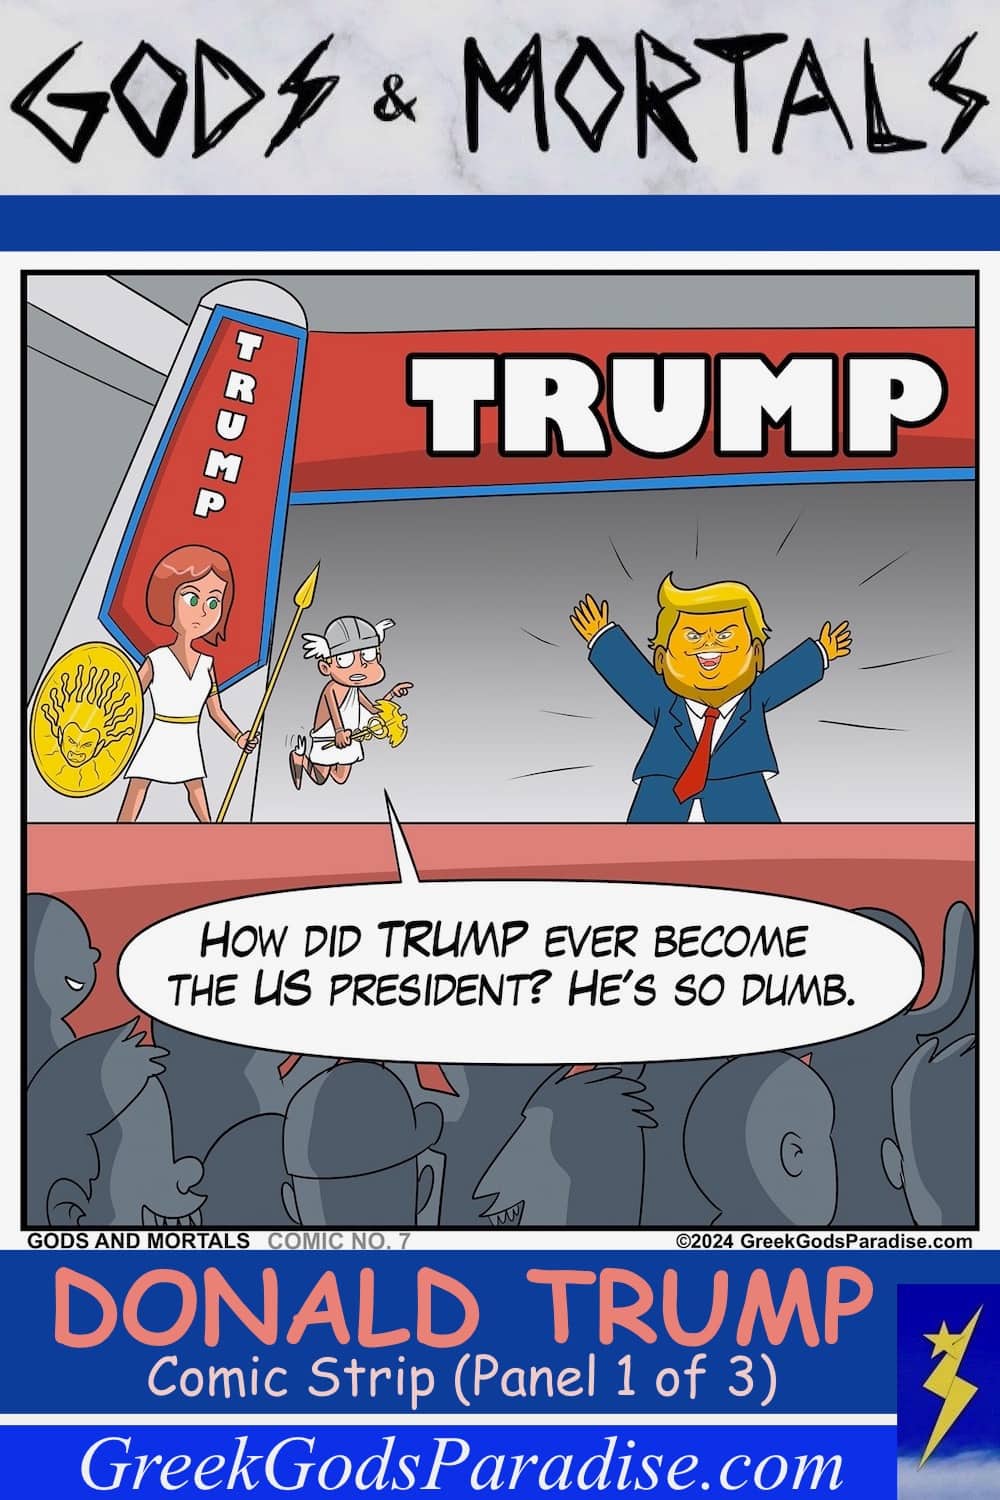 Donald Trump Comic Strip with Greek Gods